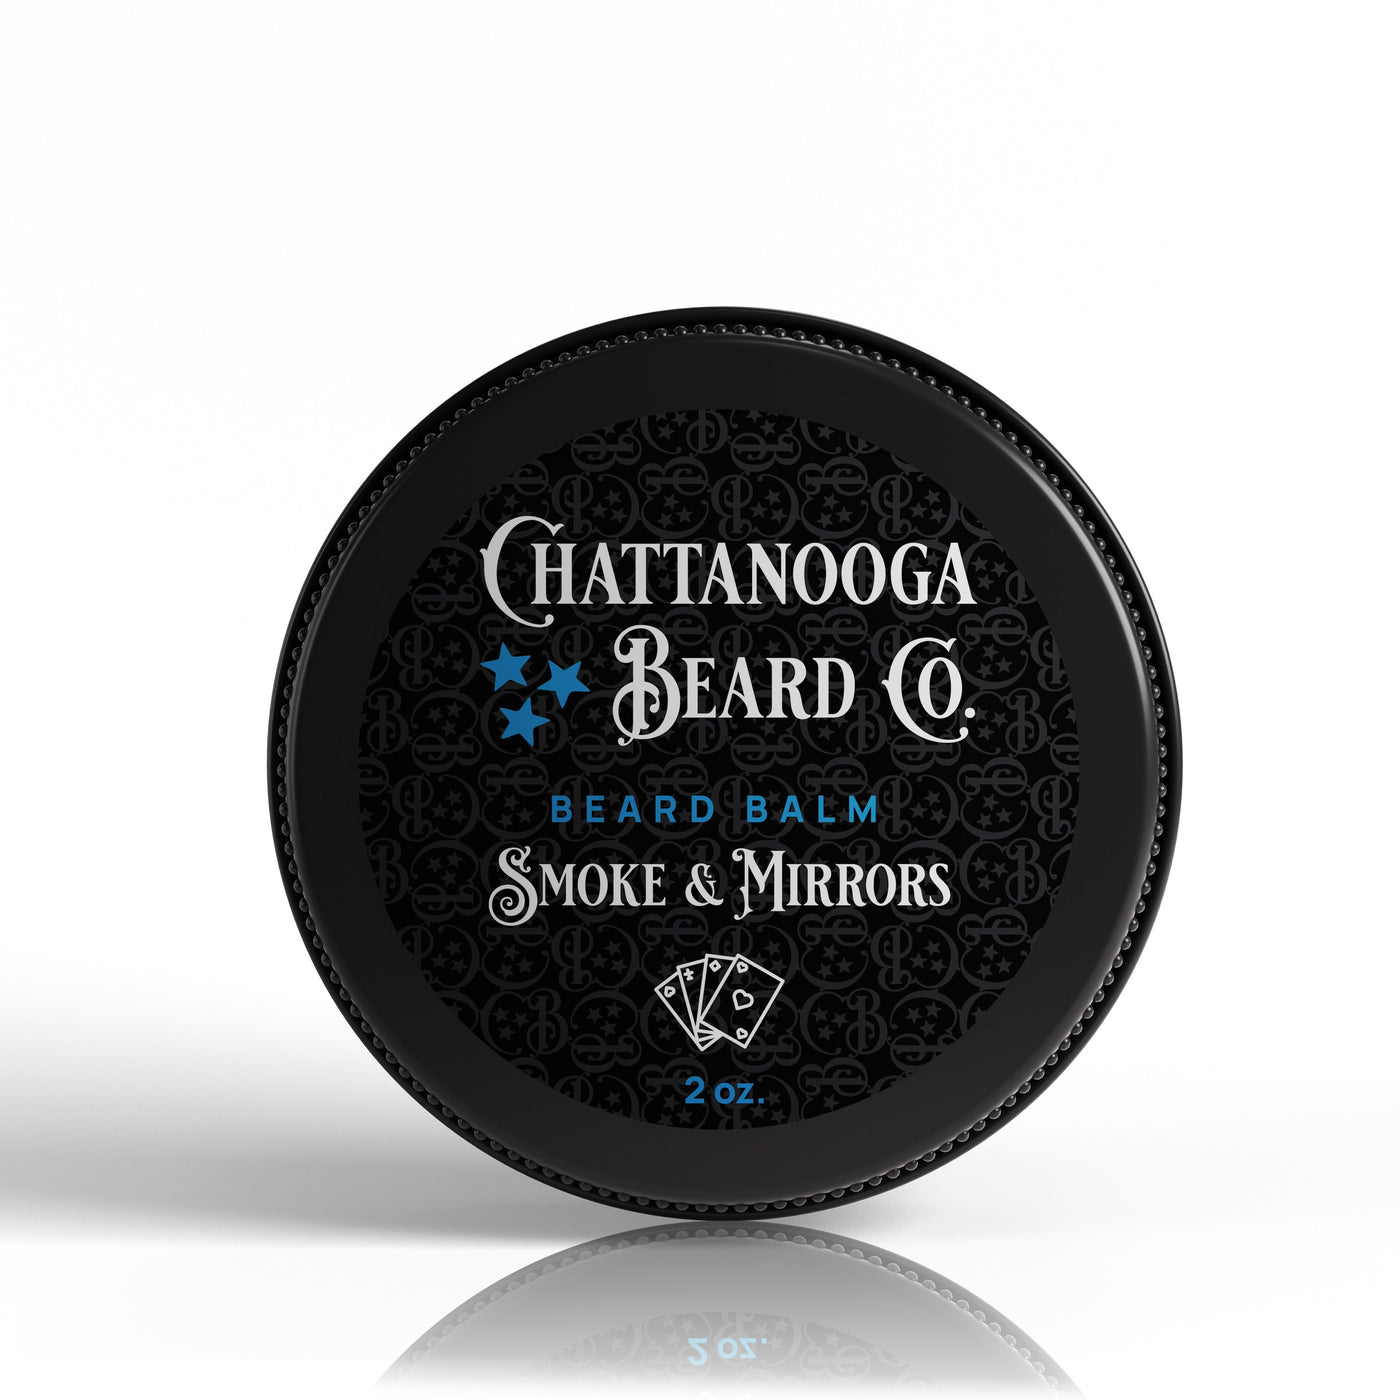 Chattanooga Beard Co. - Beard Balm Balm Chattanooga Beard Co. Smoke & Mirrors 